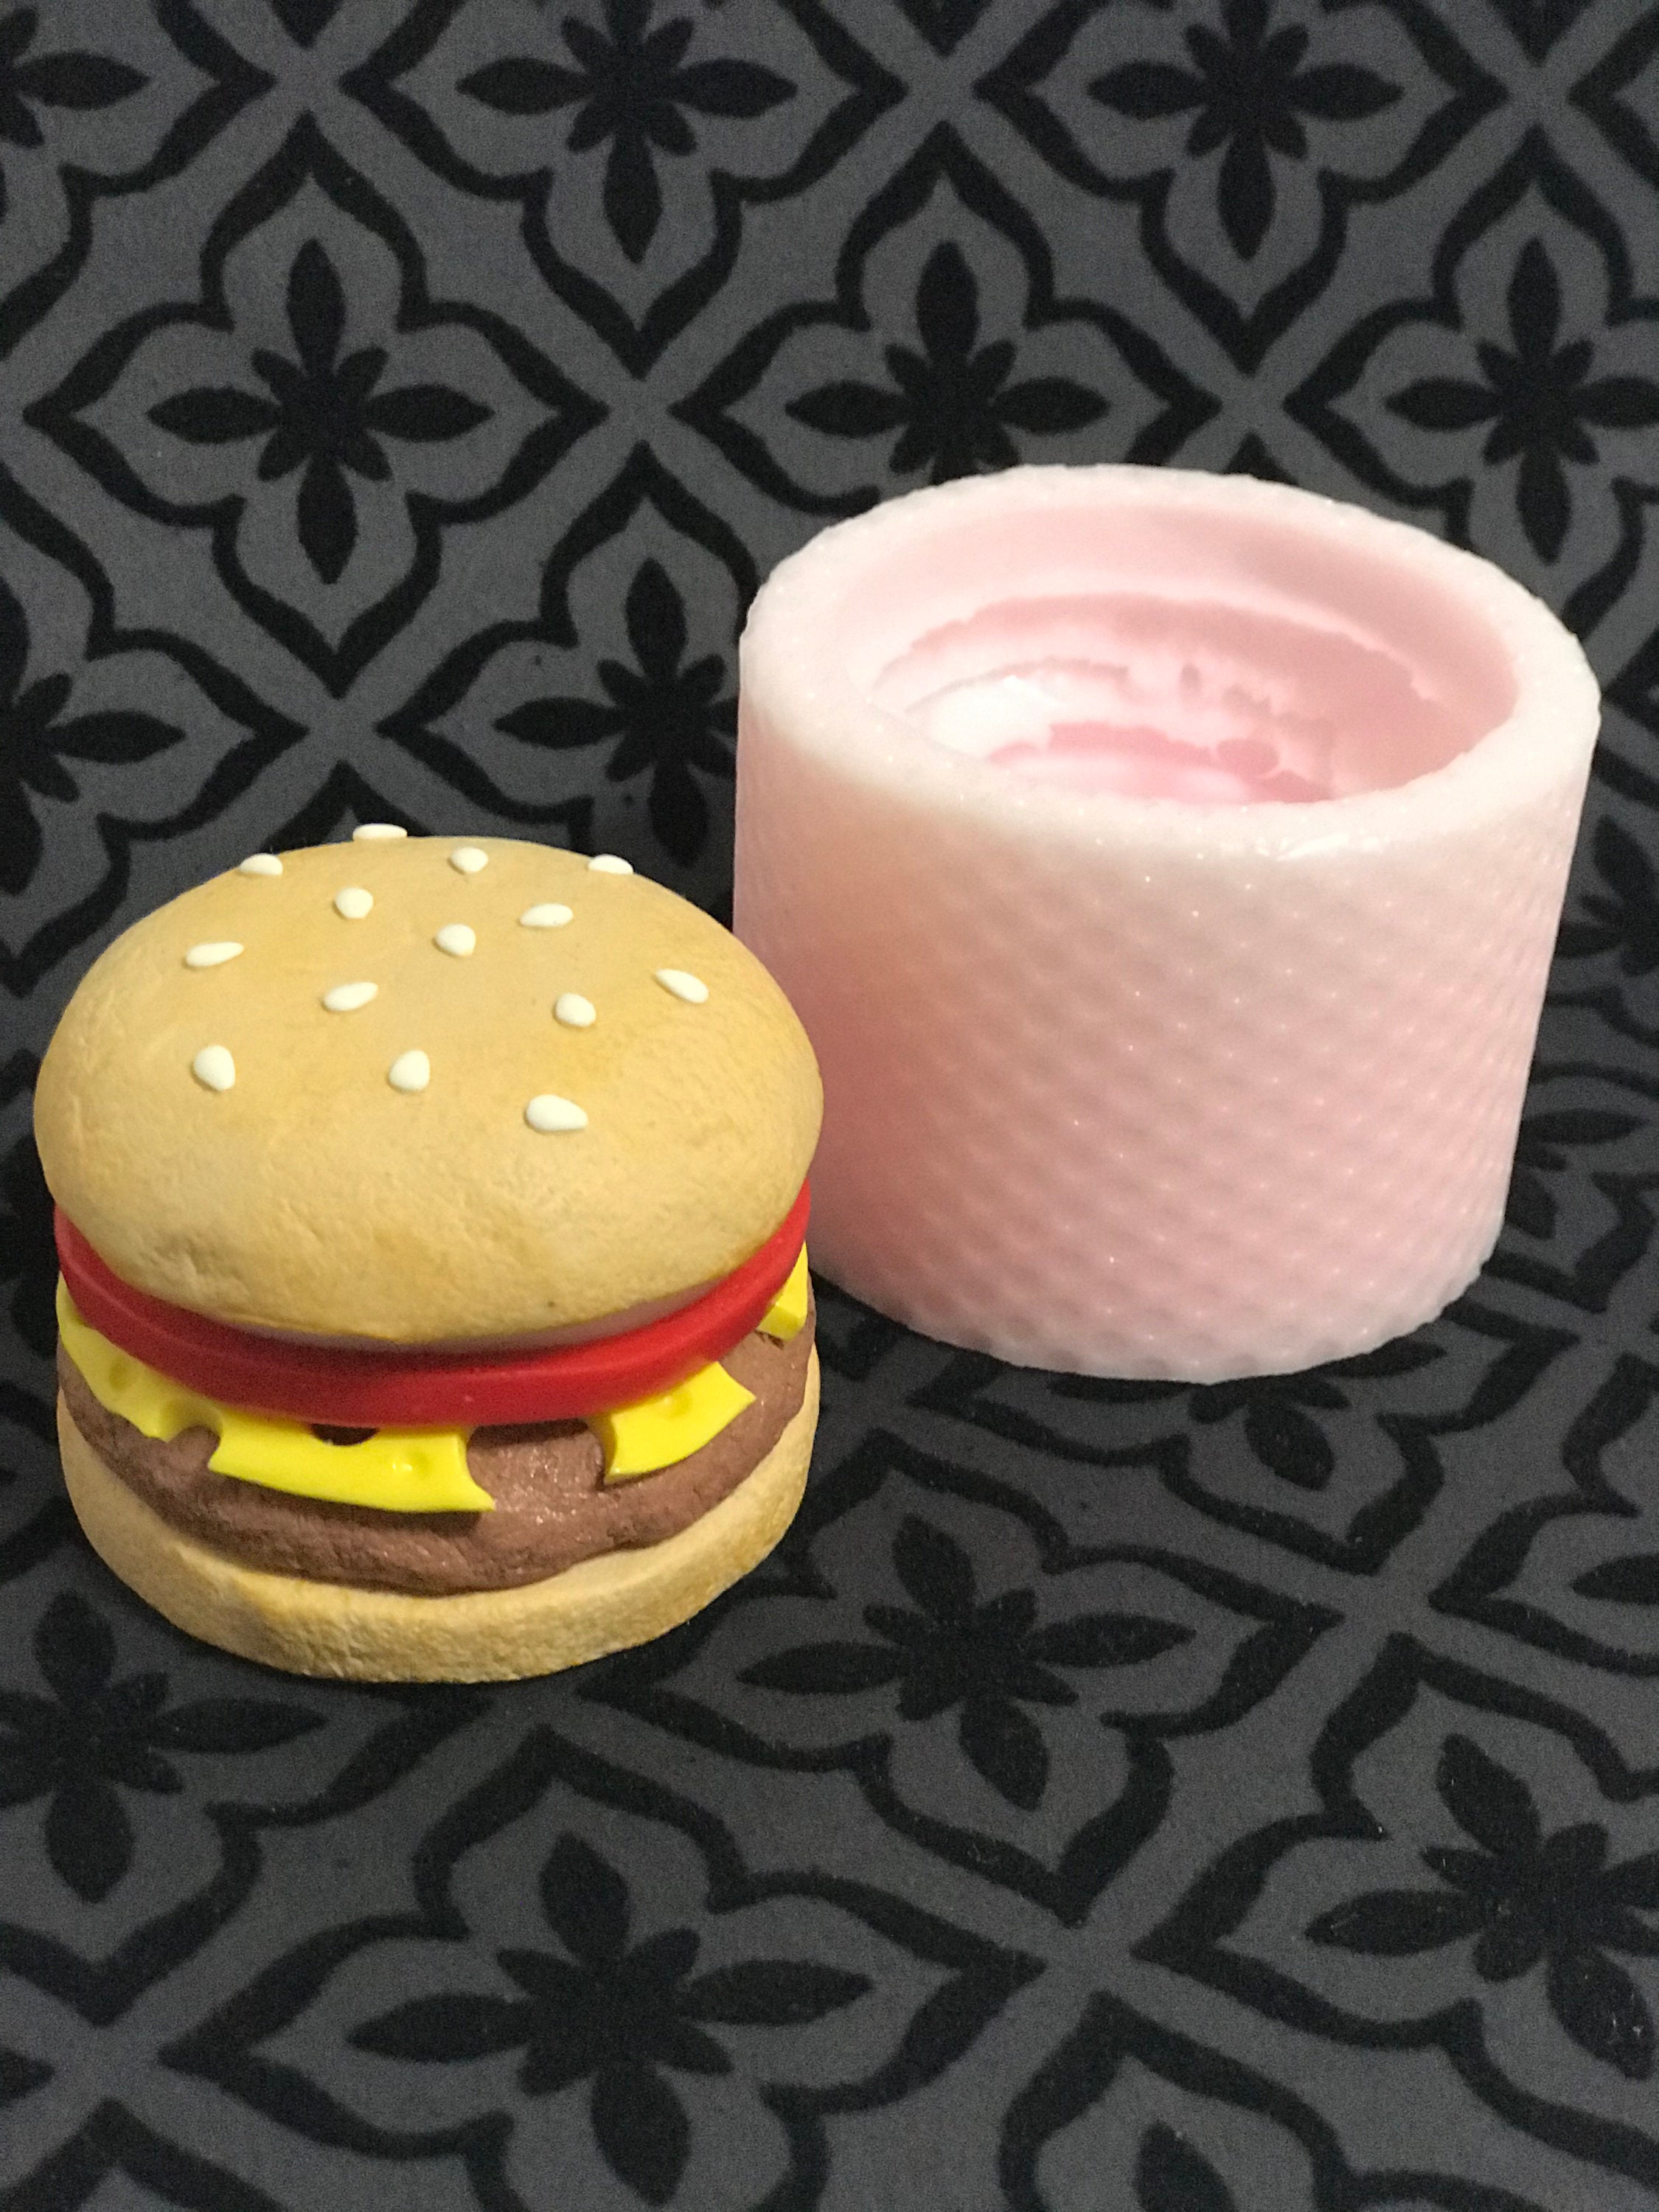 ANHTCZYX Mini Hamburger Sandwich Food Play Epoxy Resin Mold Hot Dog Tomato 1:12 Small Simulation Food Silicone Molds Craft Tools